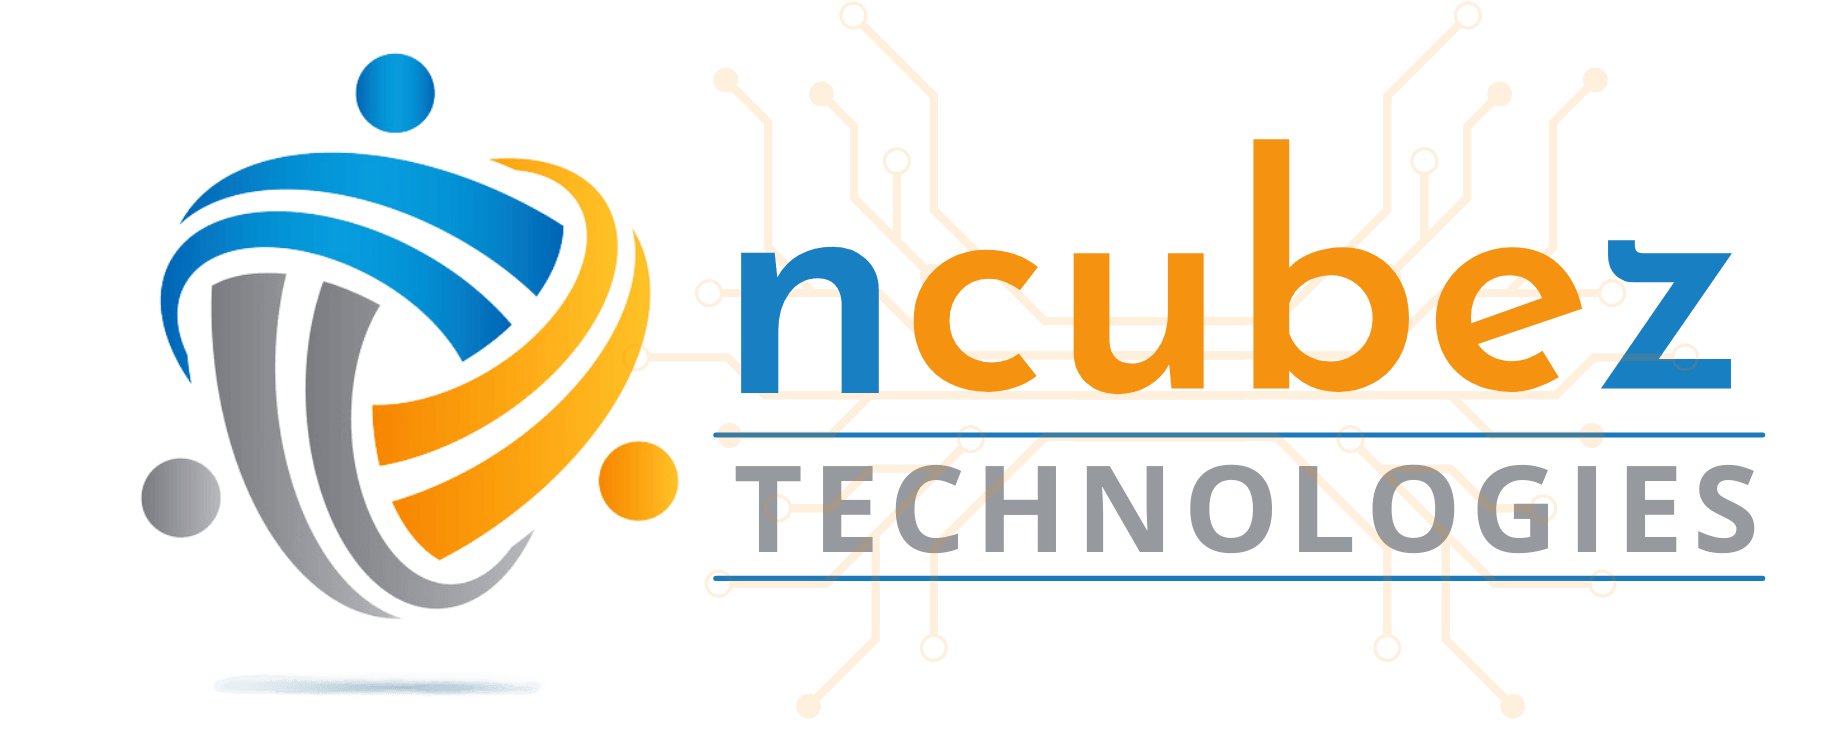 SAP Ncubez Technologies